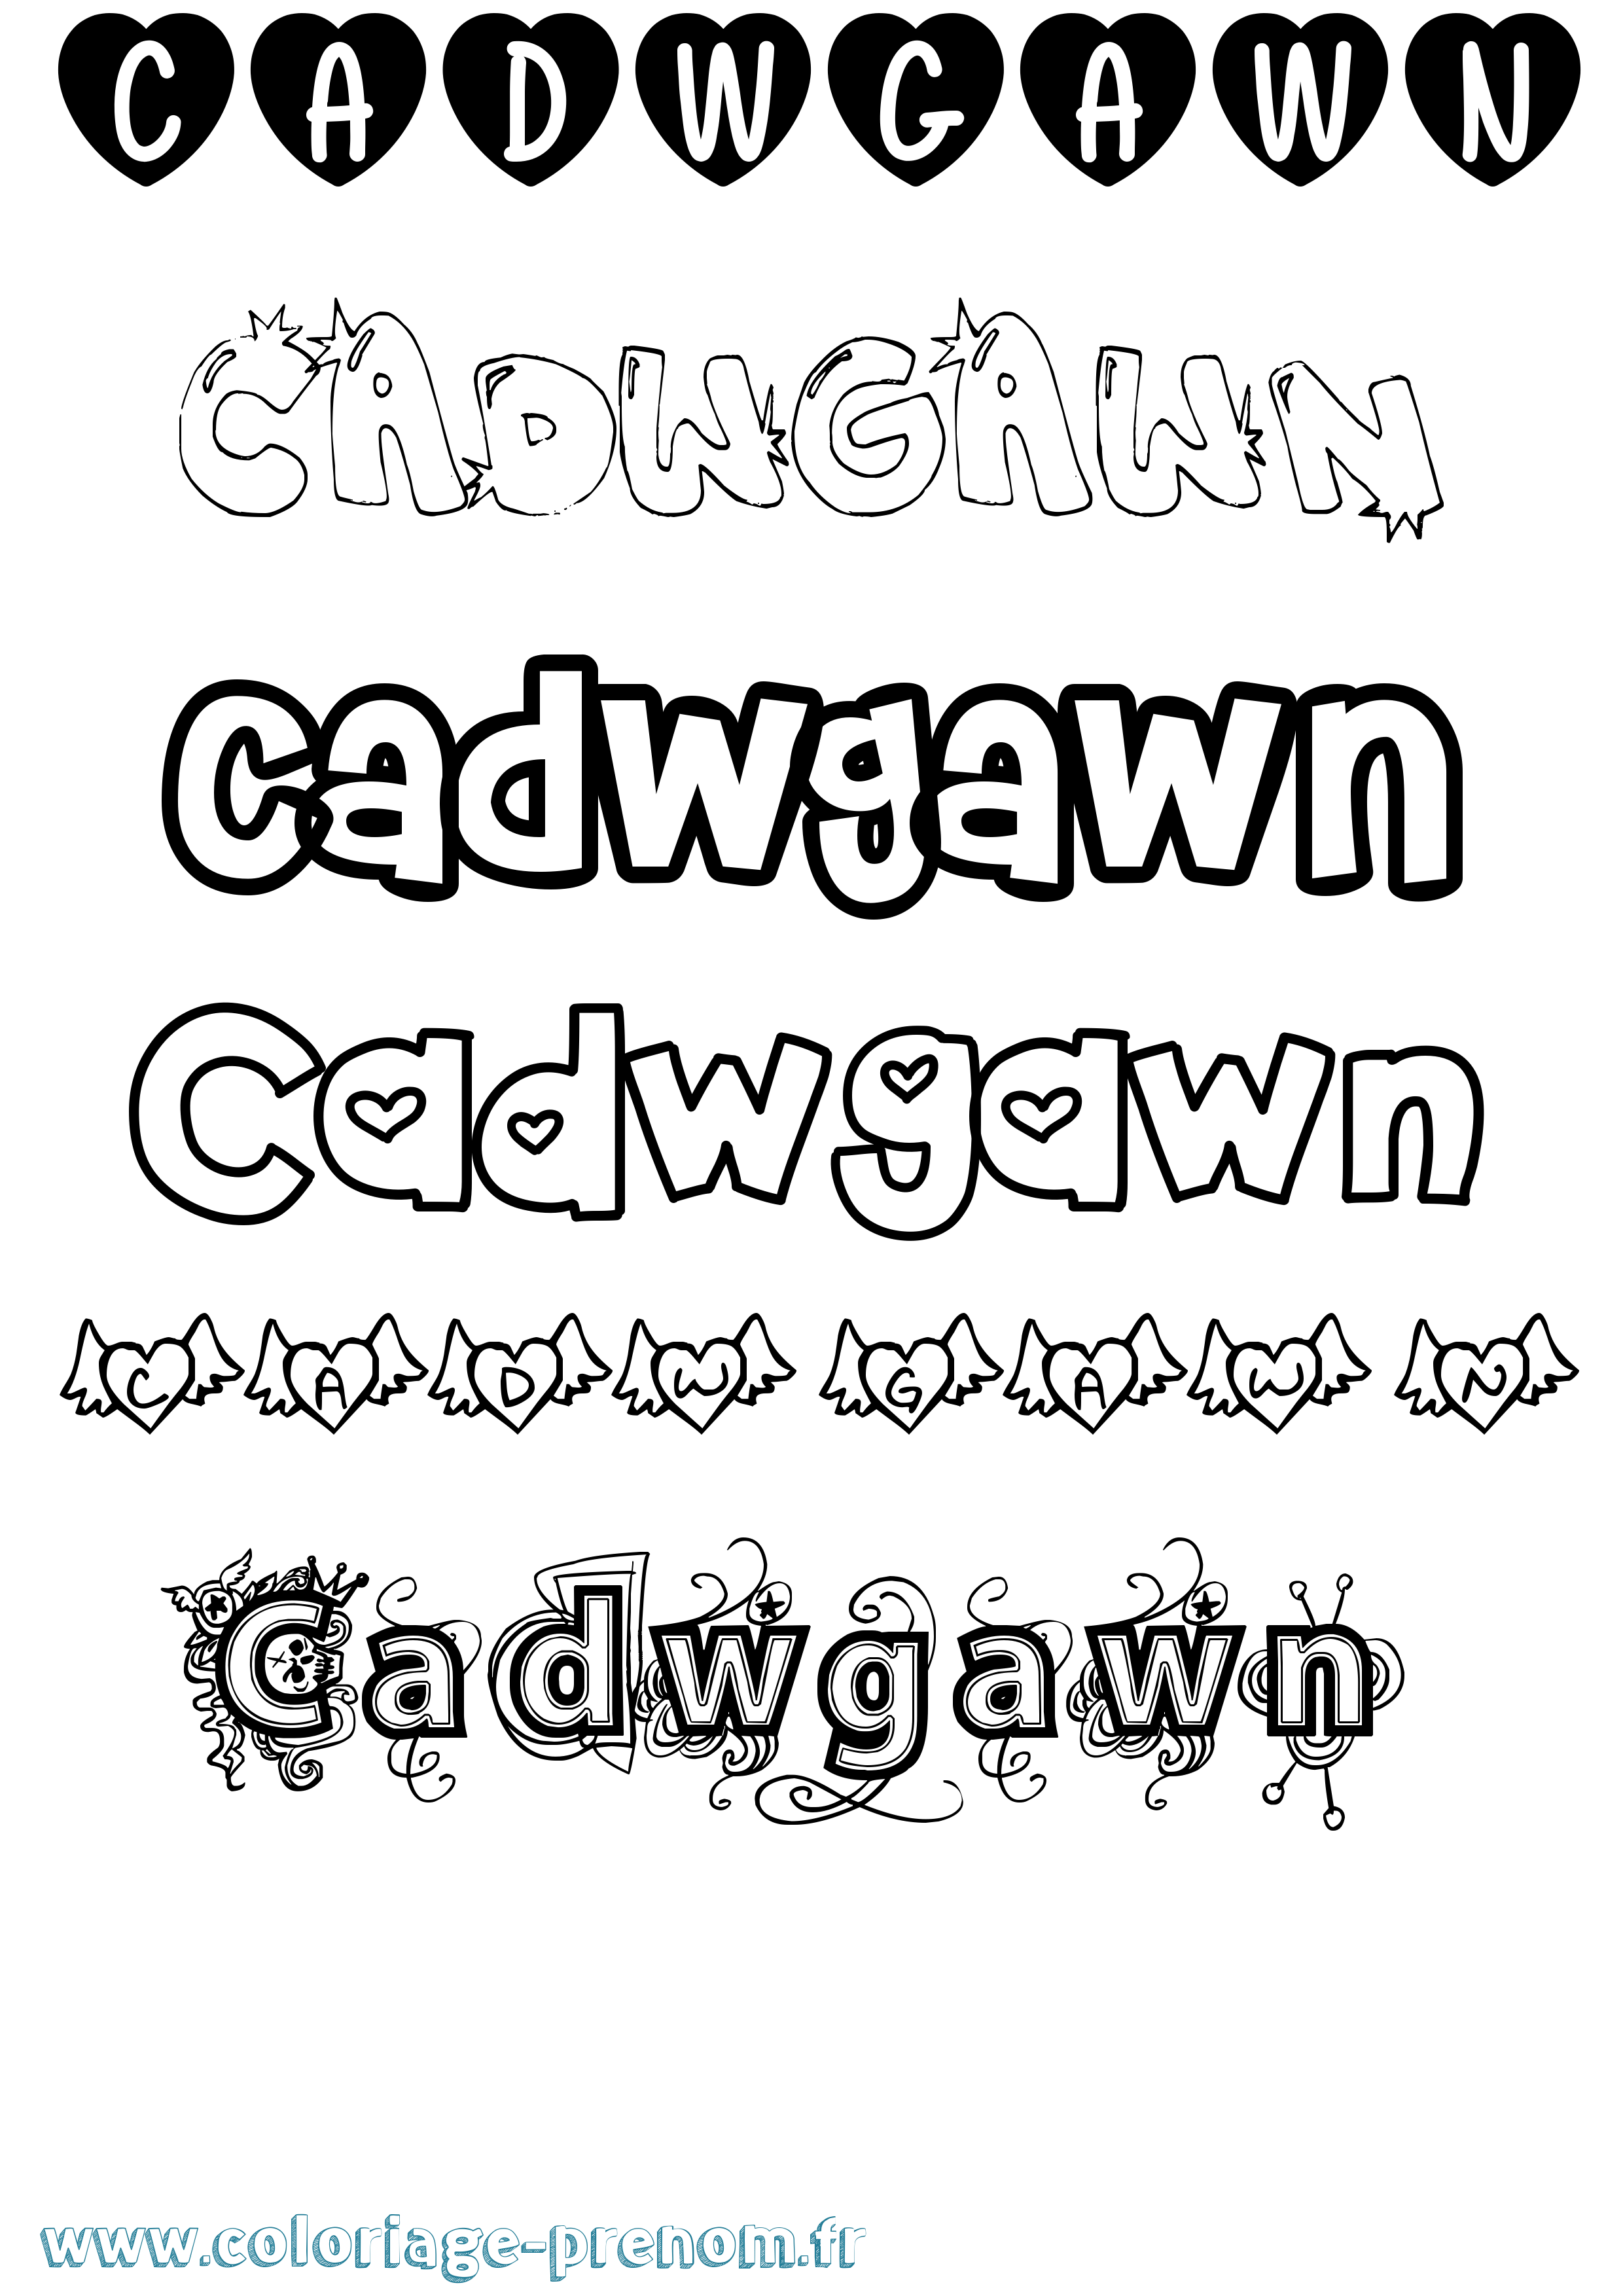 Coloriage prénom Cadwgawn Girly